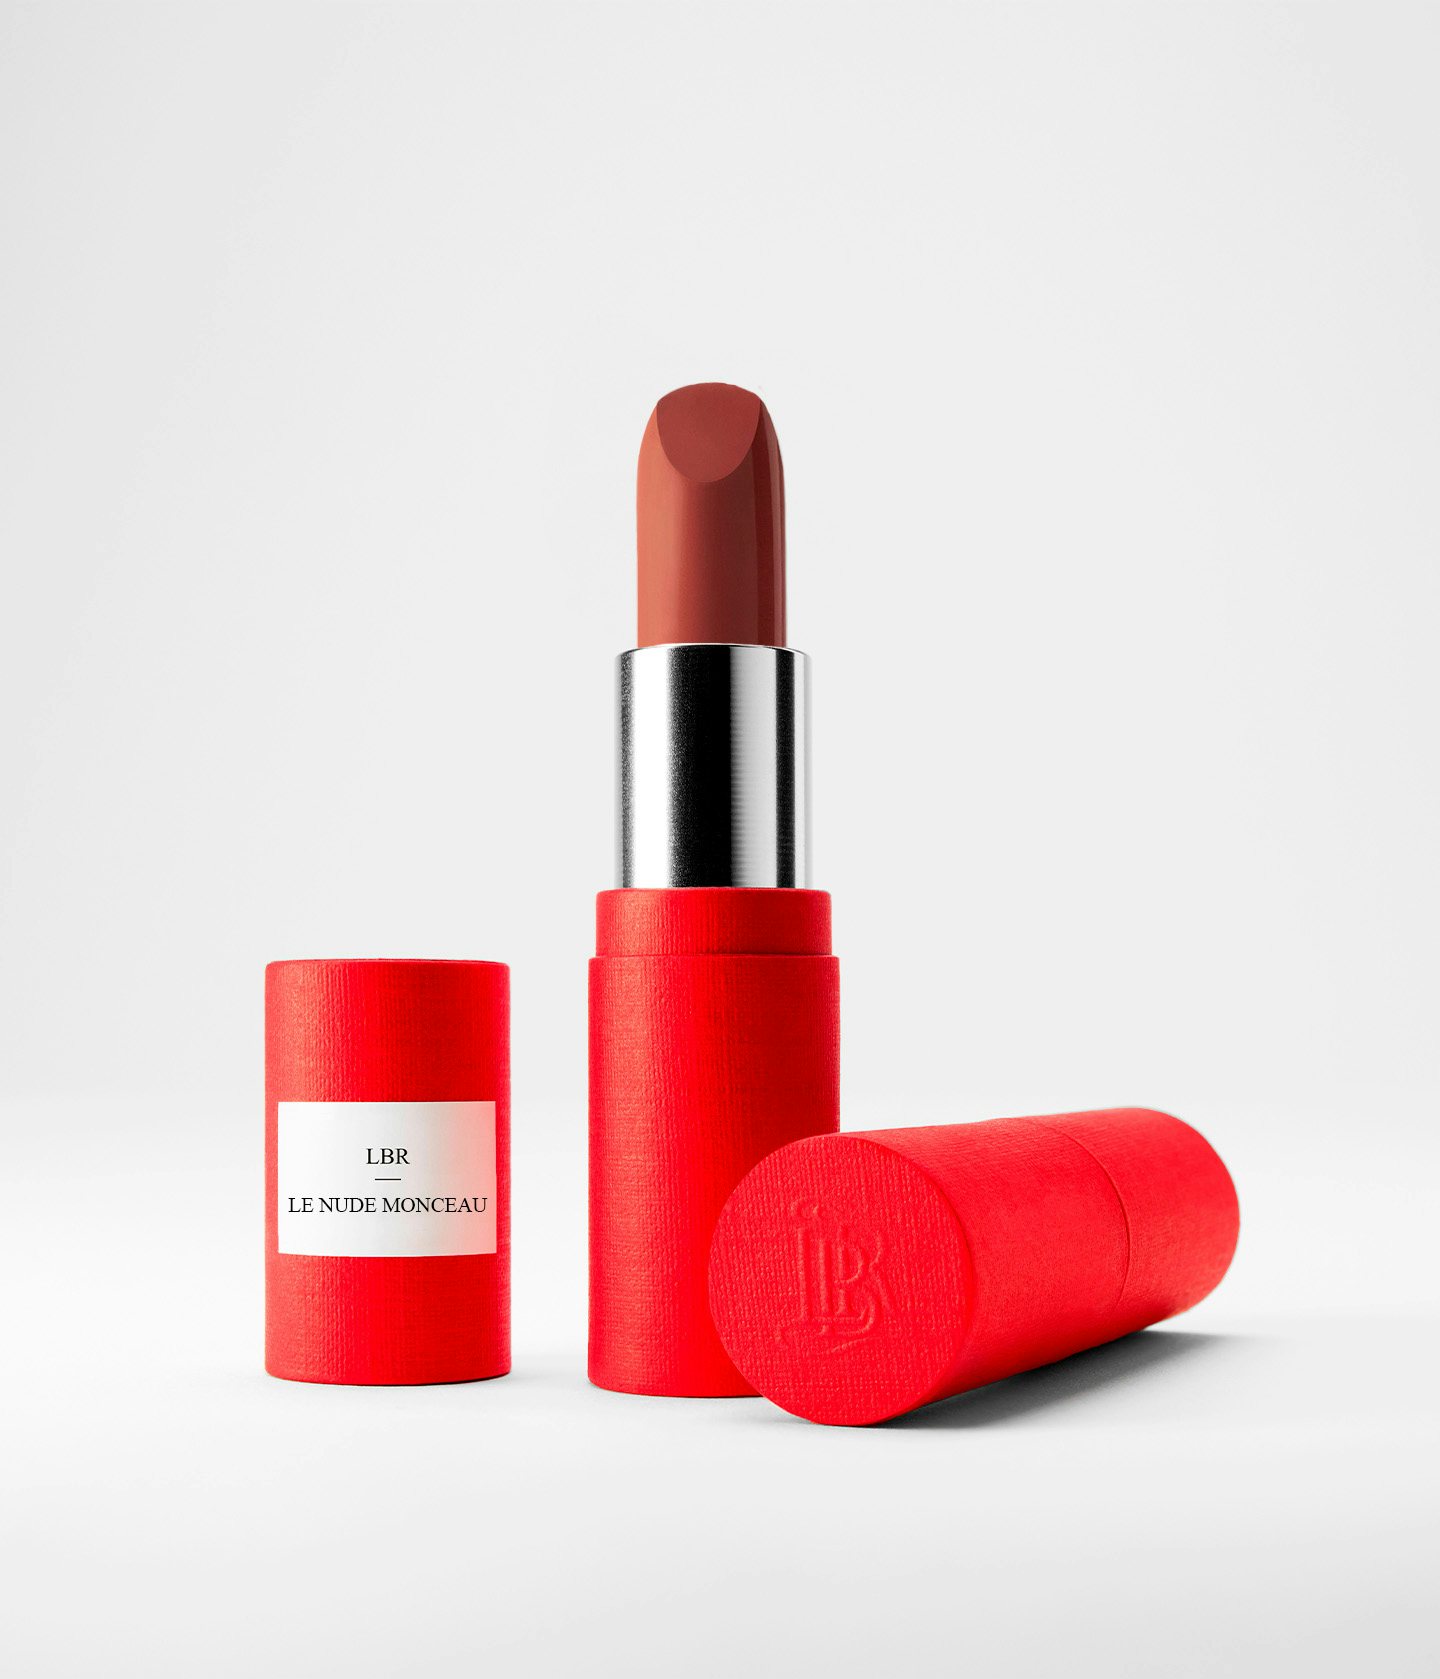 La bouche rouge Le Nude Monceau lipstick in the red paper case